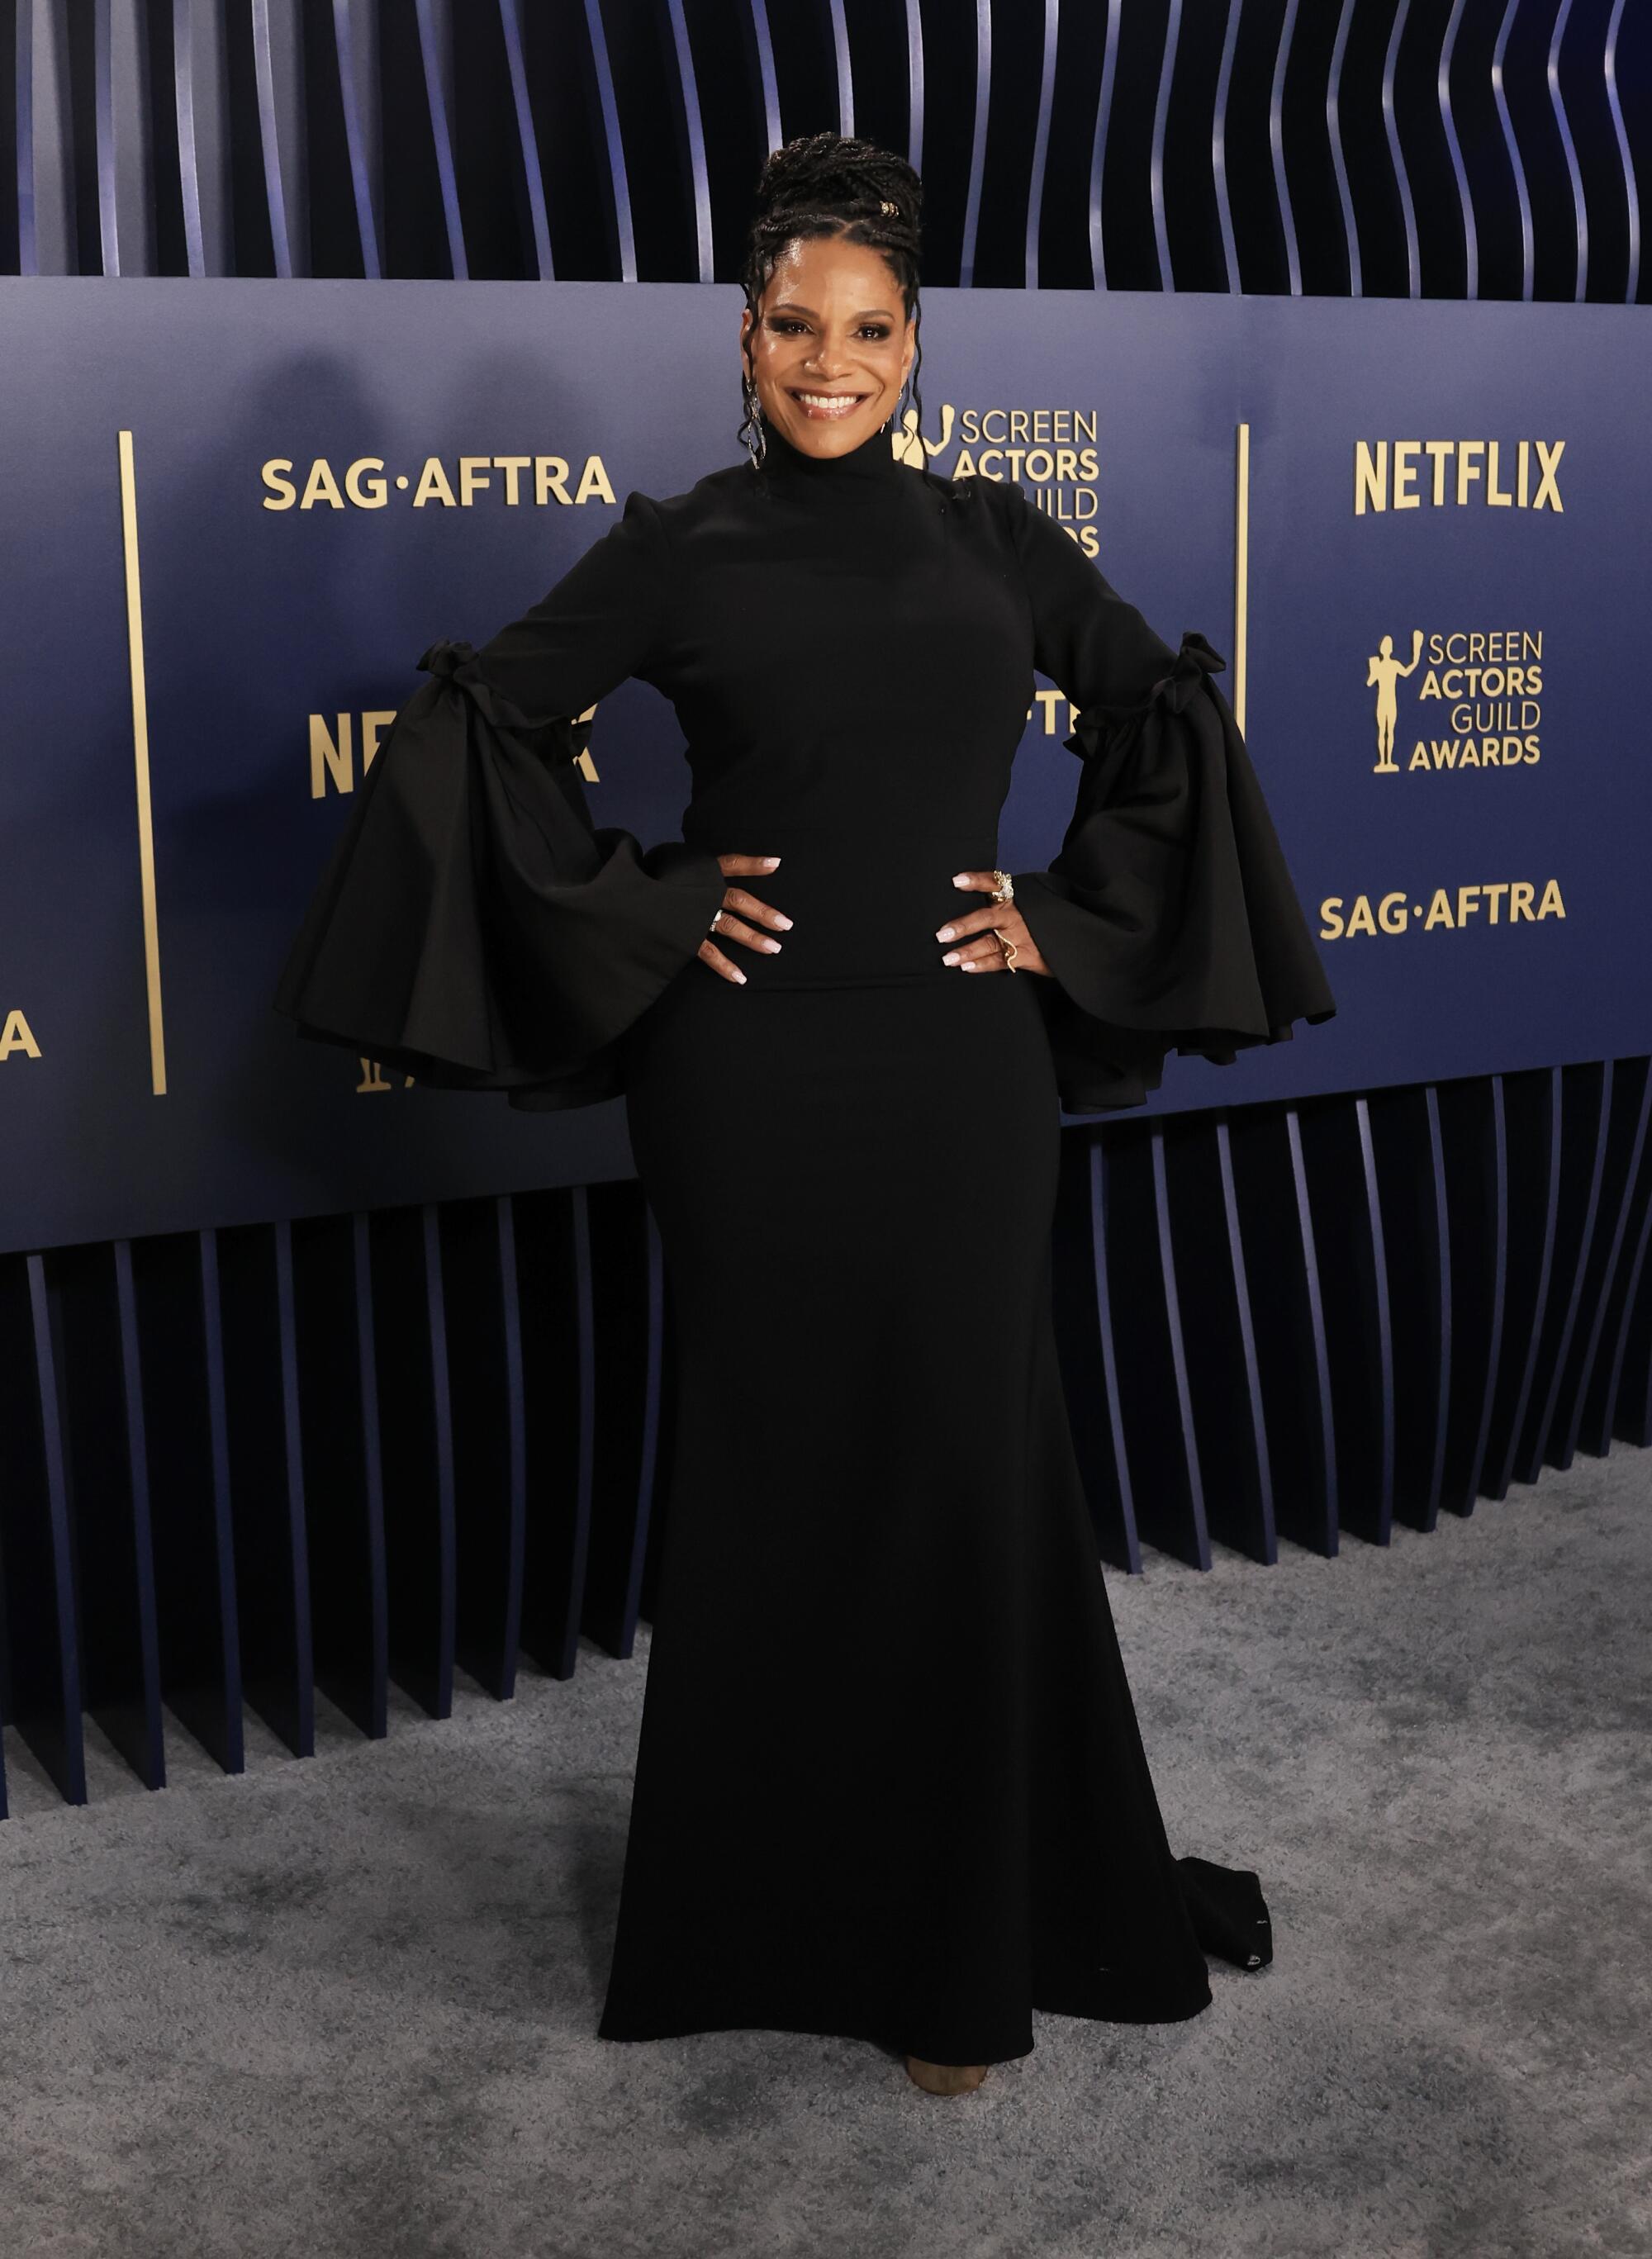 Audra McDonald wears a black long-sleeved dress to the SAG Awards.